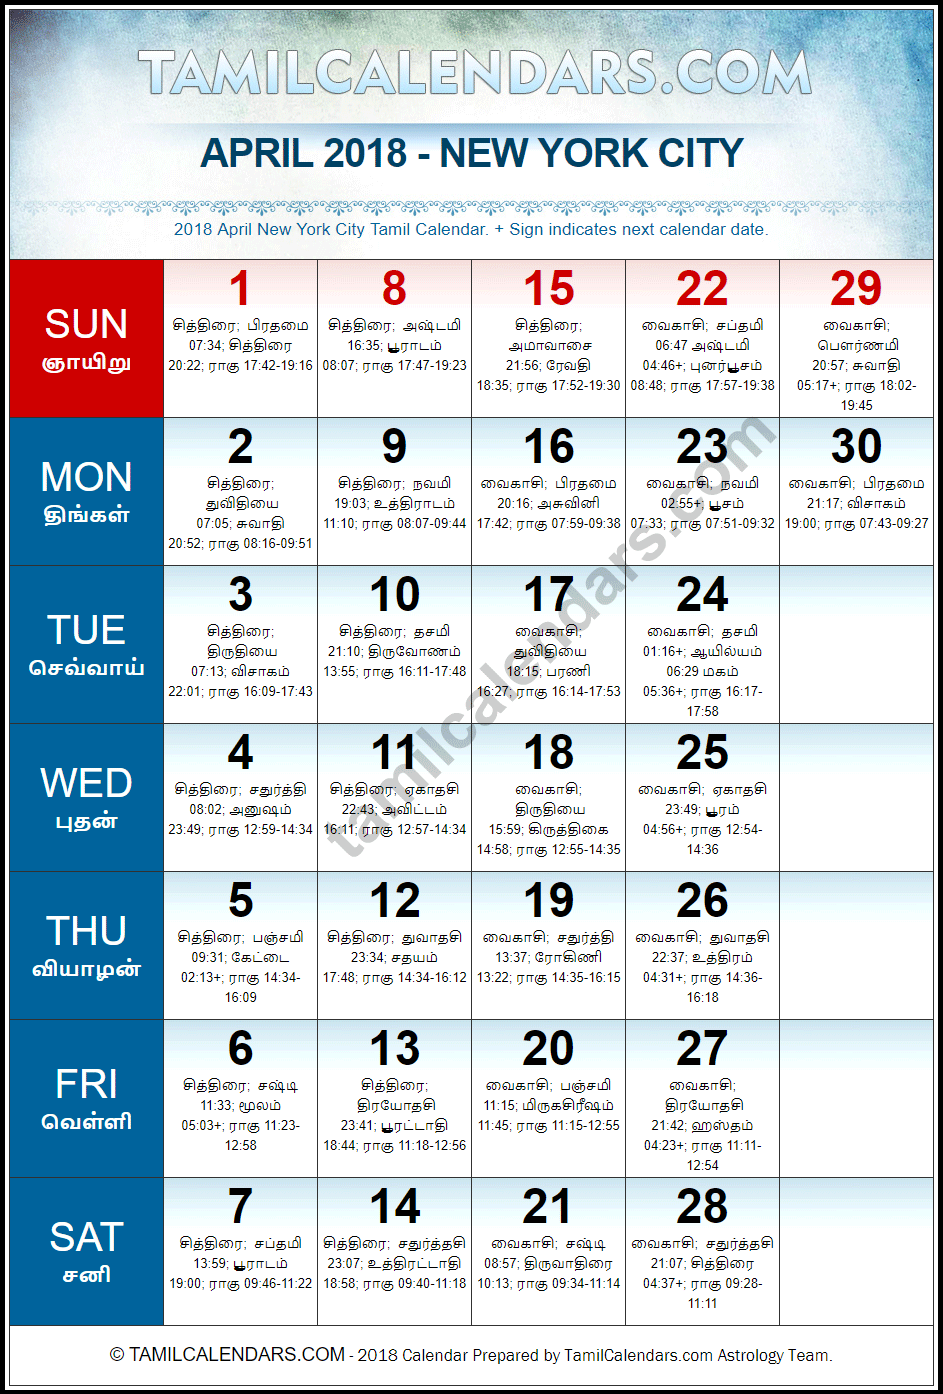 April 2018 Tamil Calendar for New York, USA